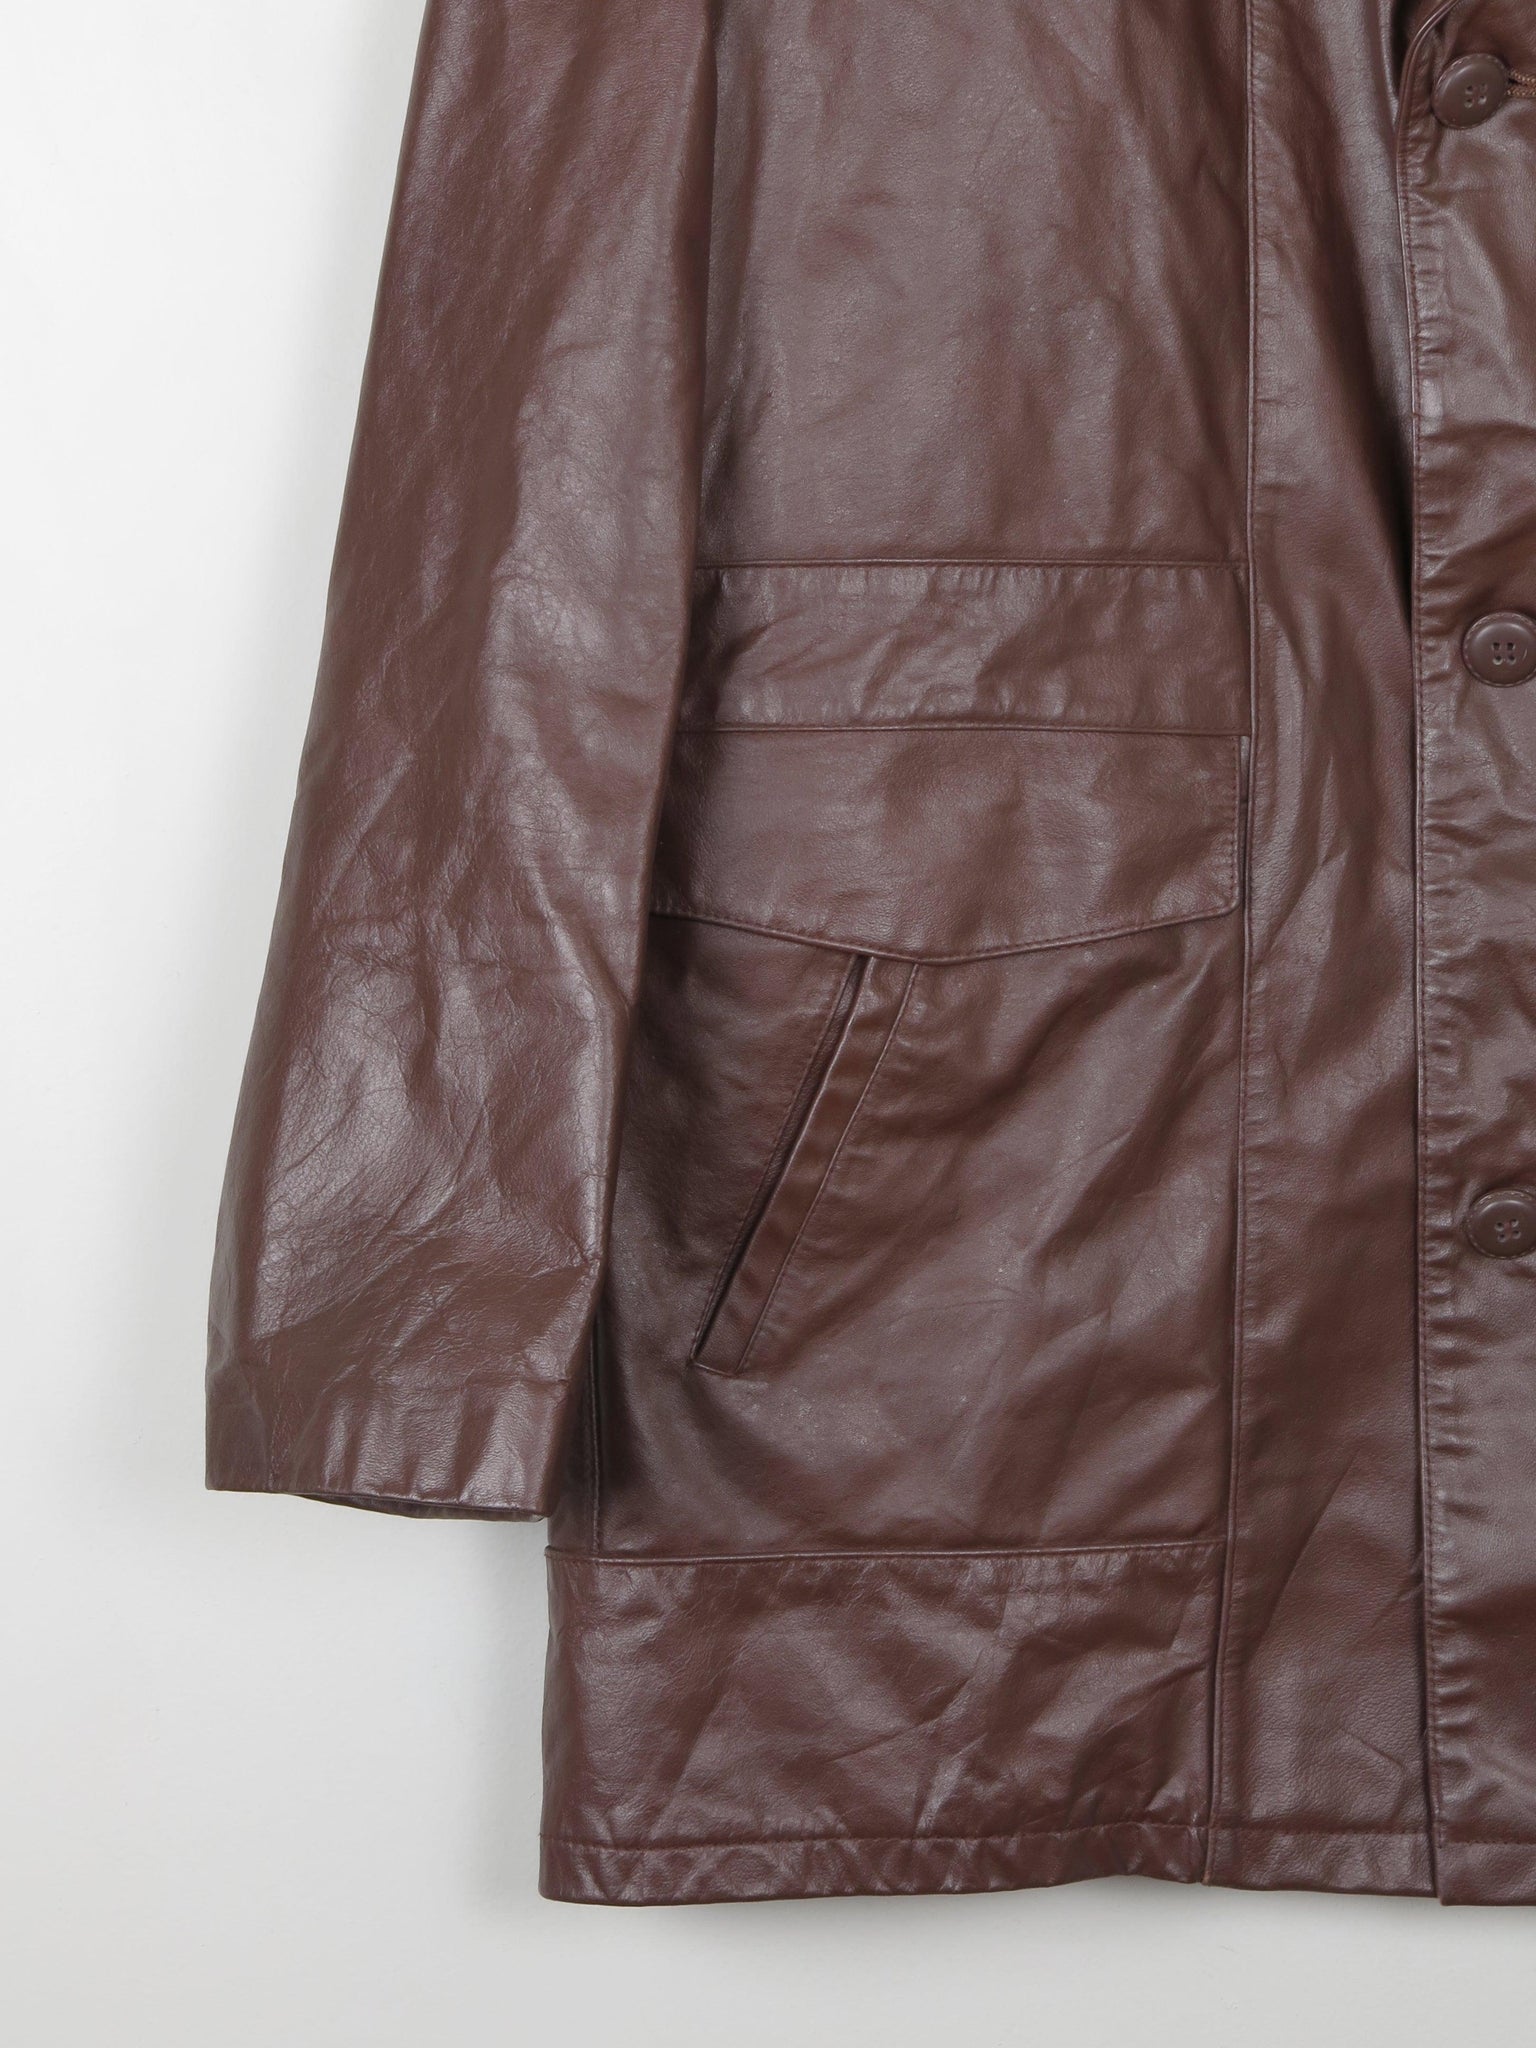 Men's Wine/Burgundy Leather Jacket Sears Size 44 /Large - The Harlequin